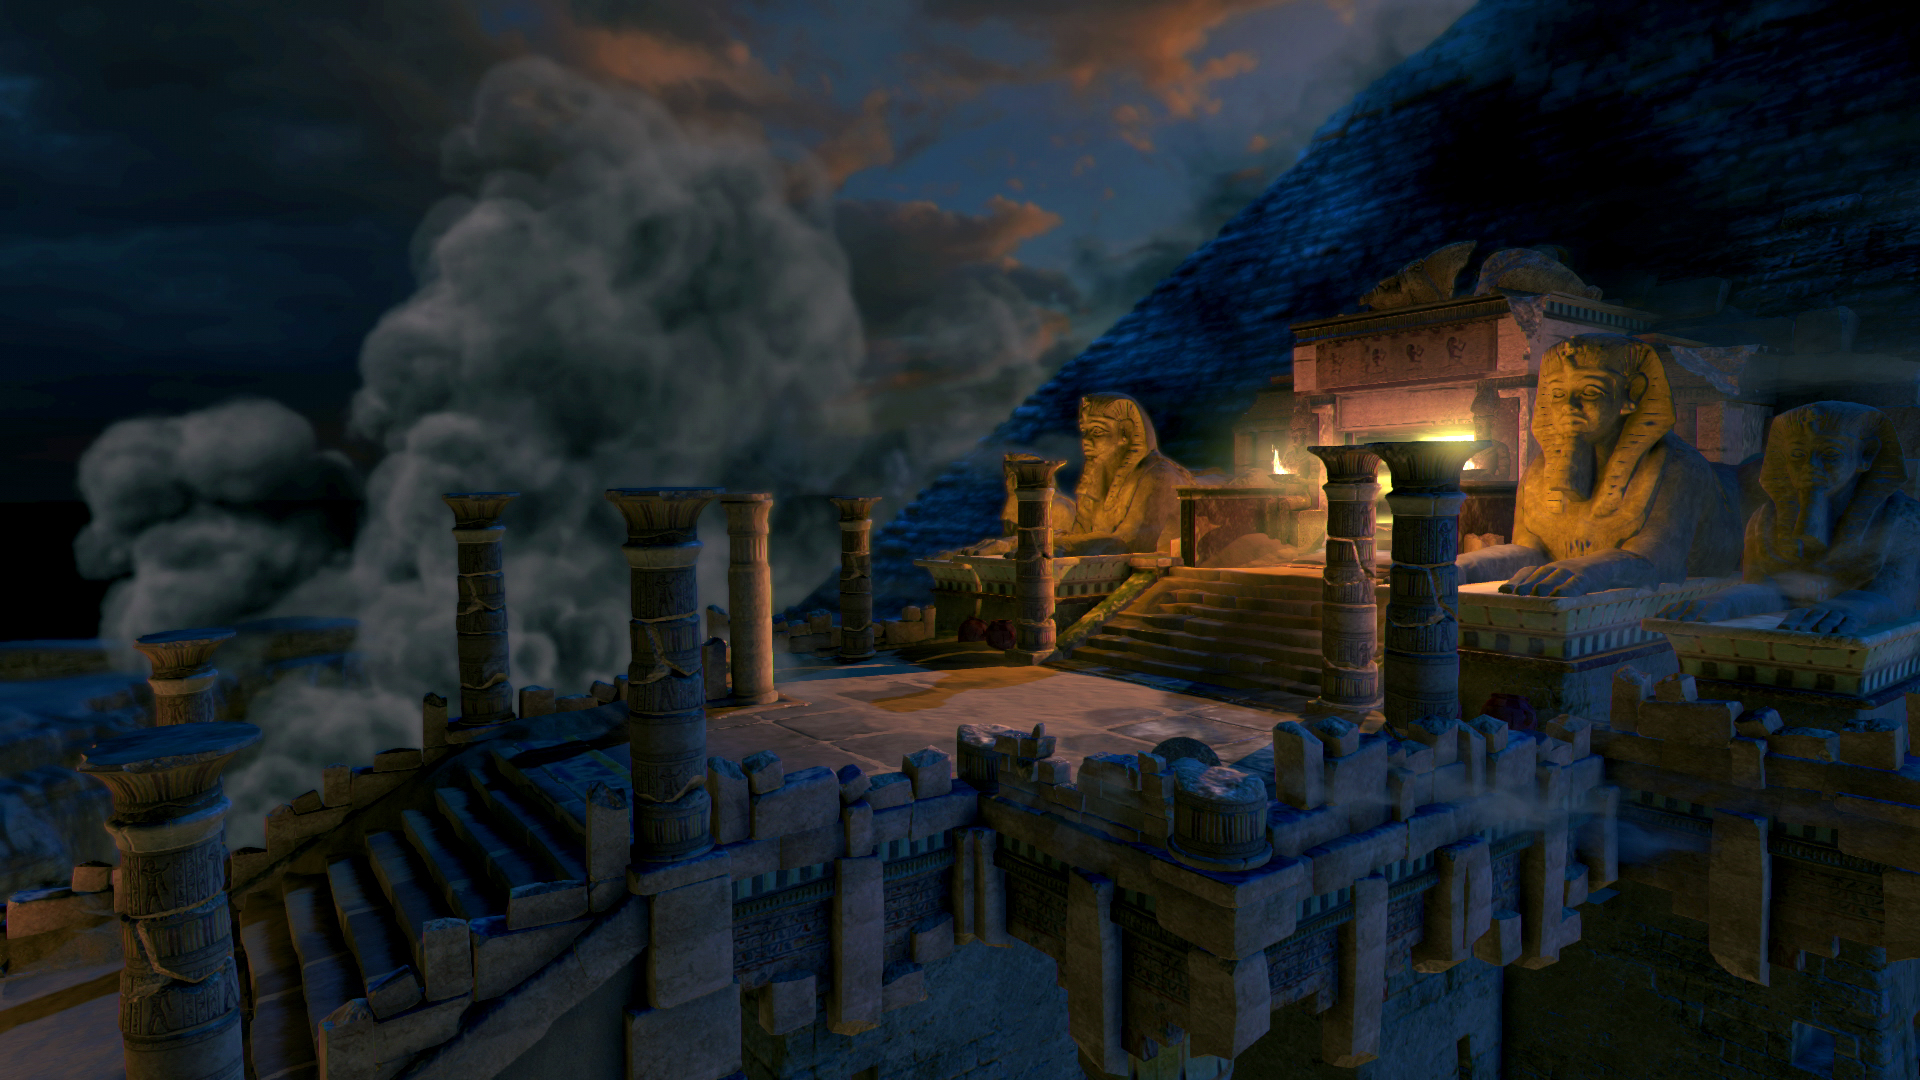 劳拉和奥西里斯神庙/Lara Croft and the Temple of Osiris